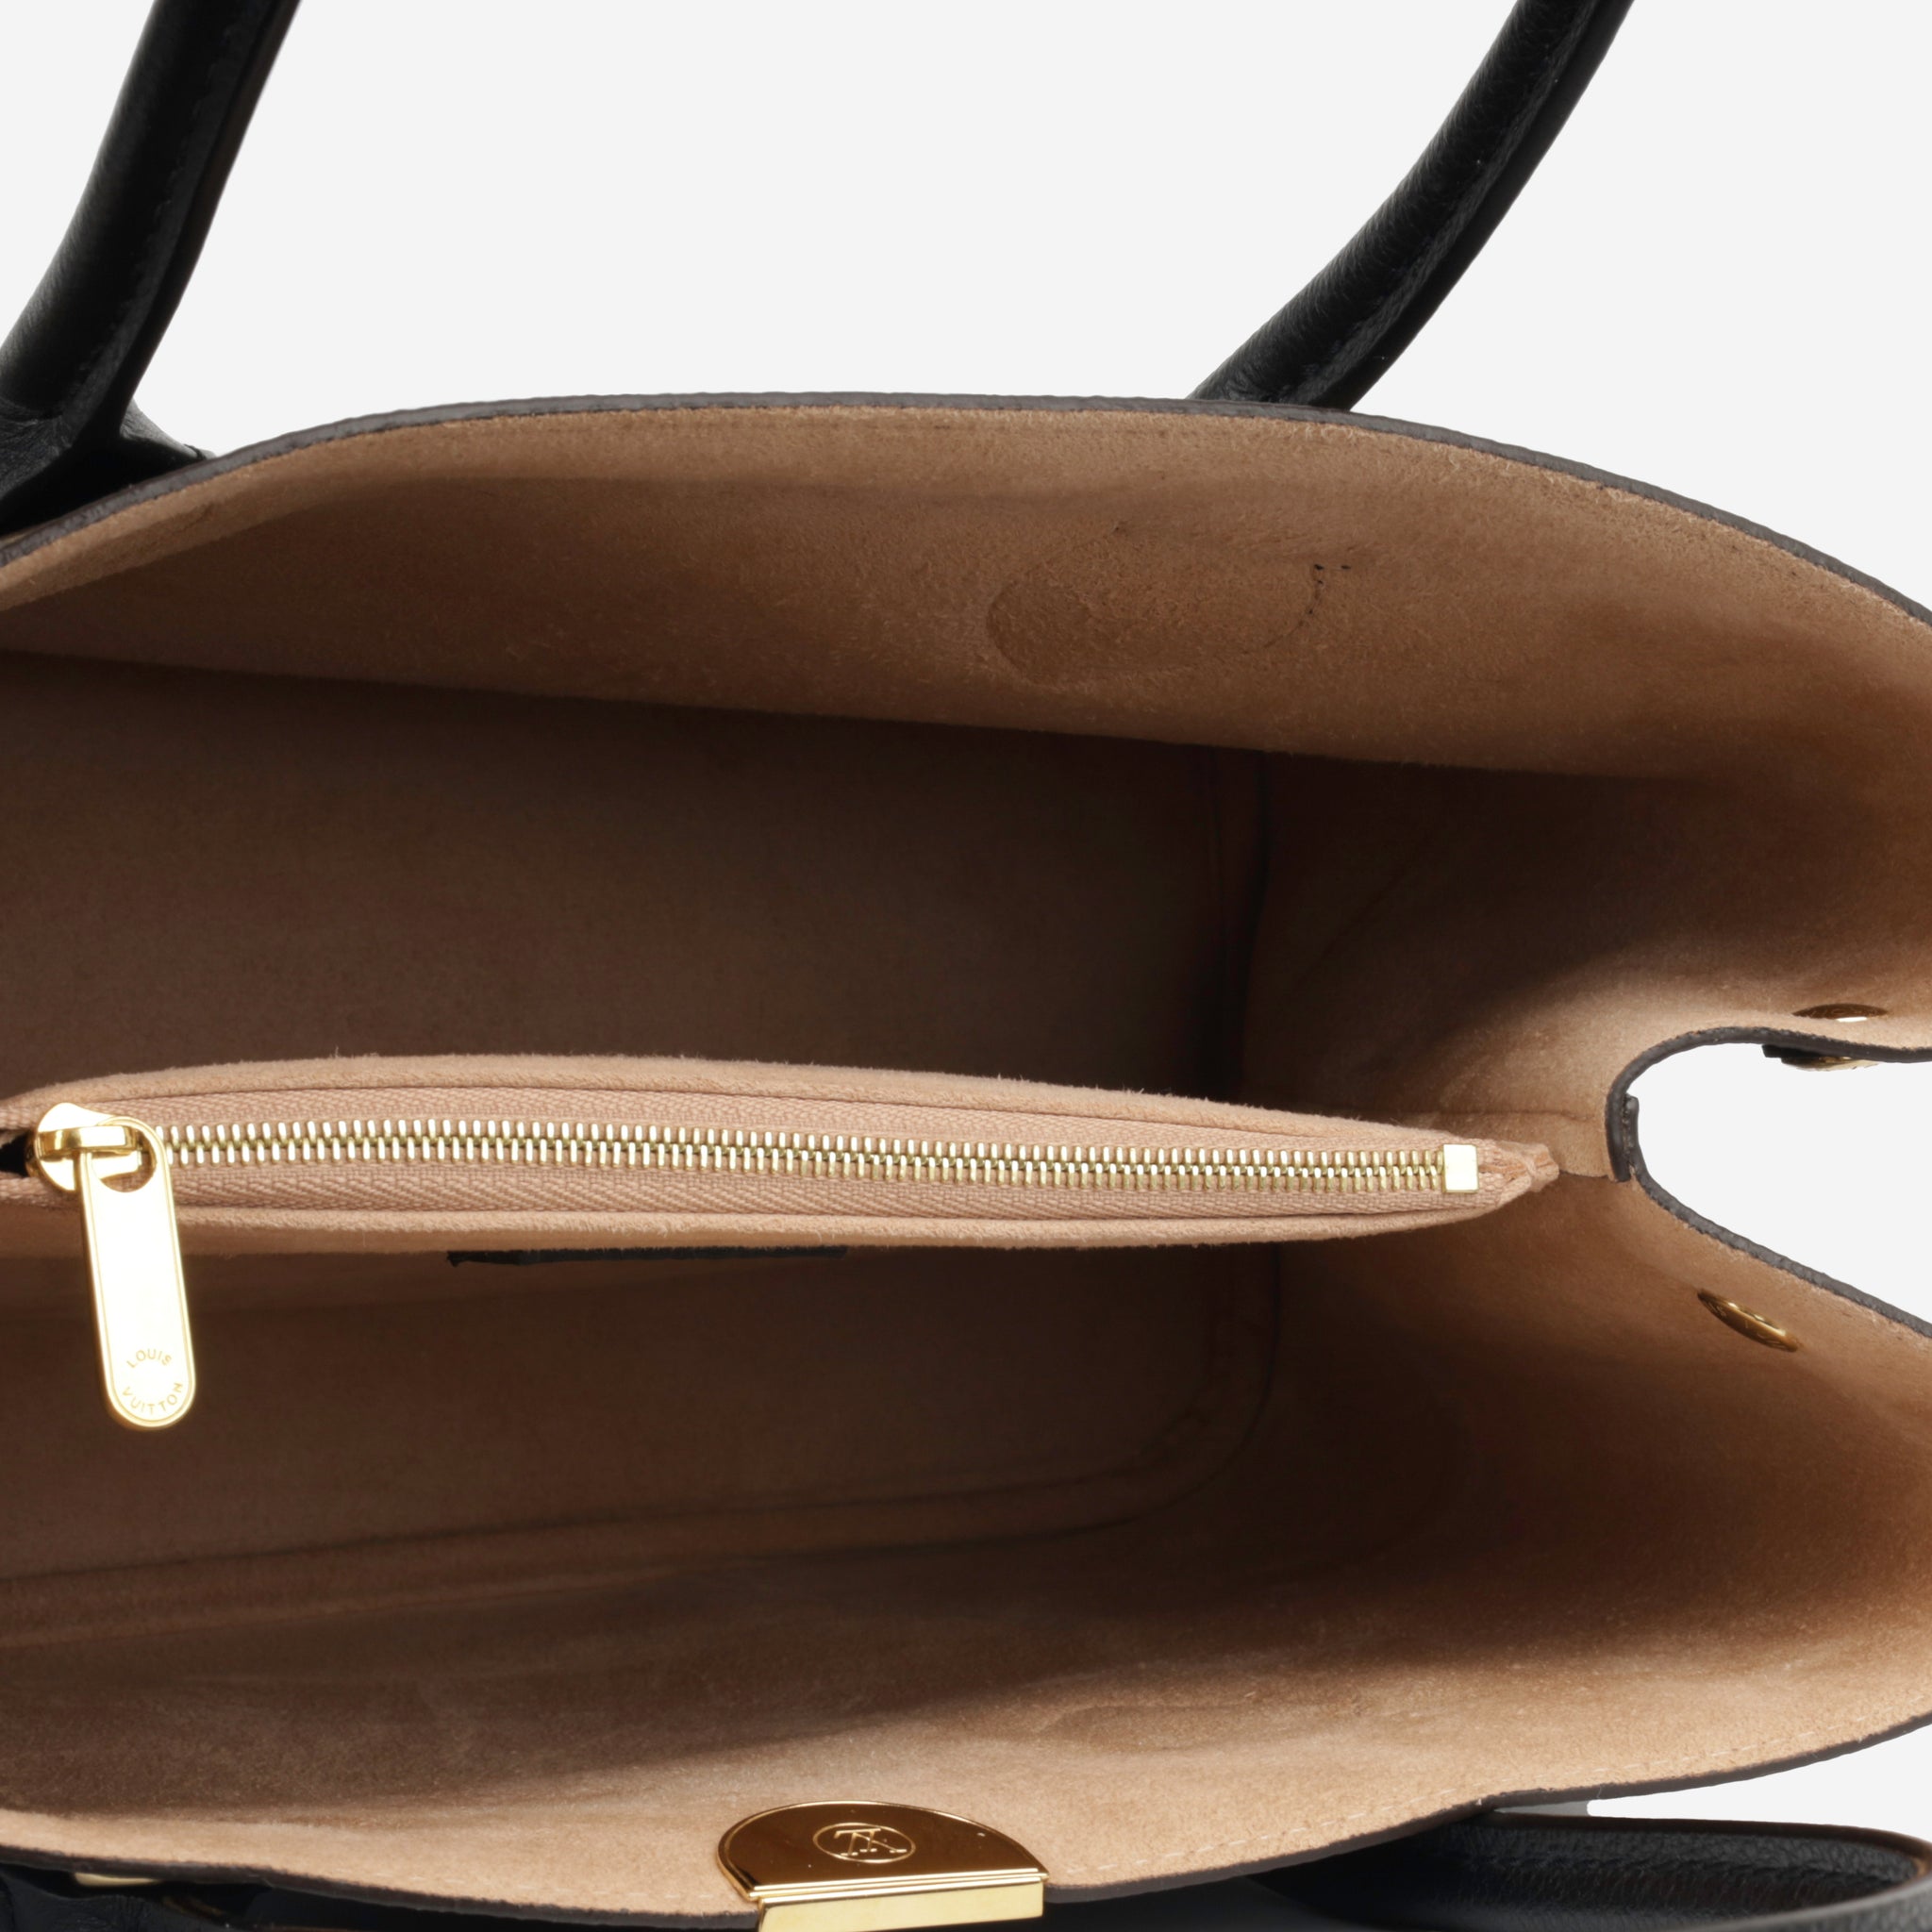 Flandrin leather handbag